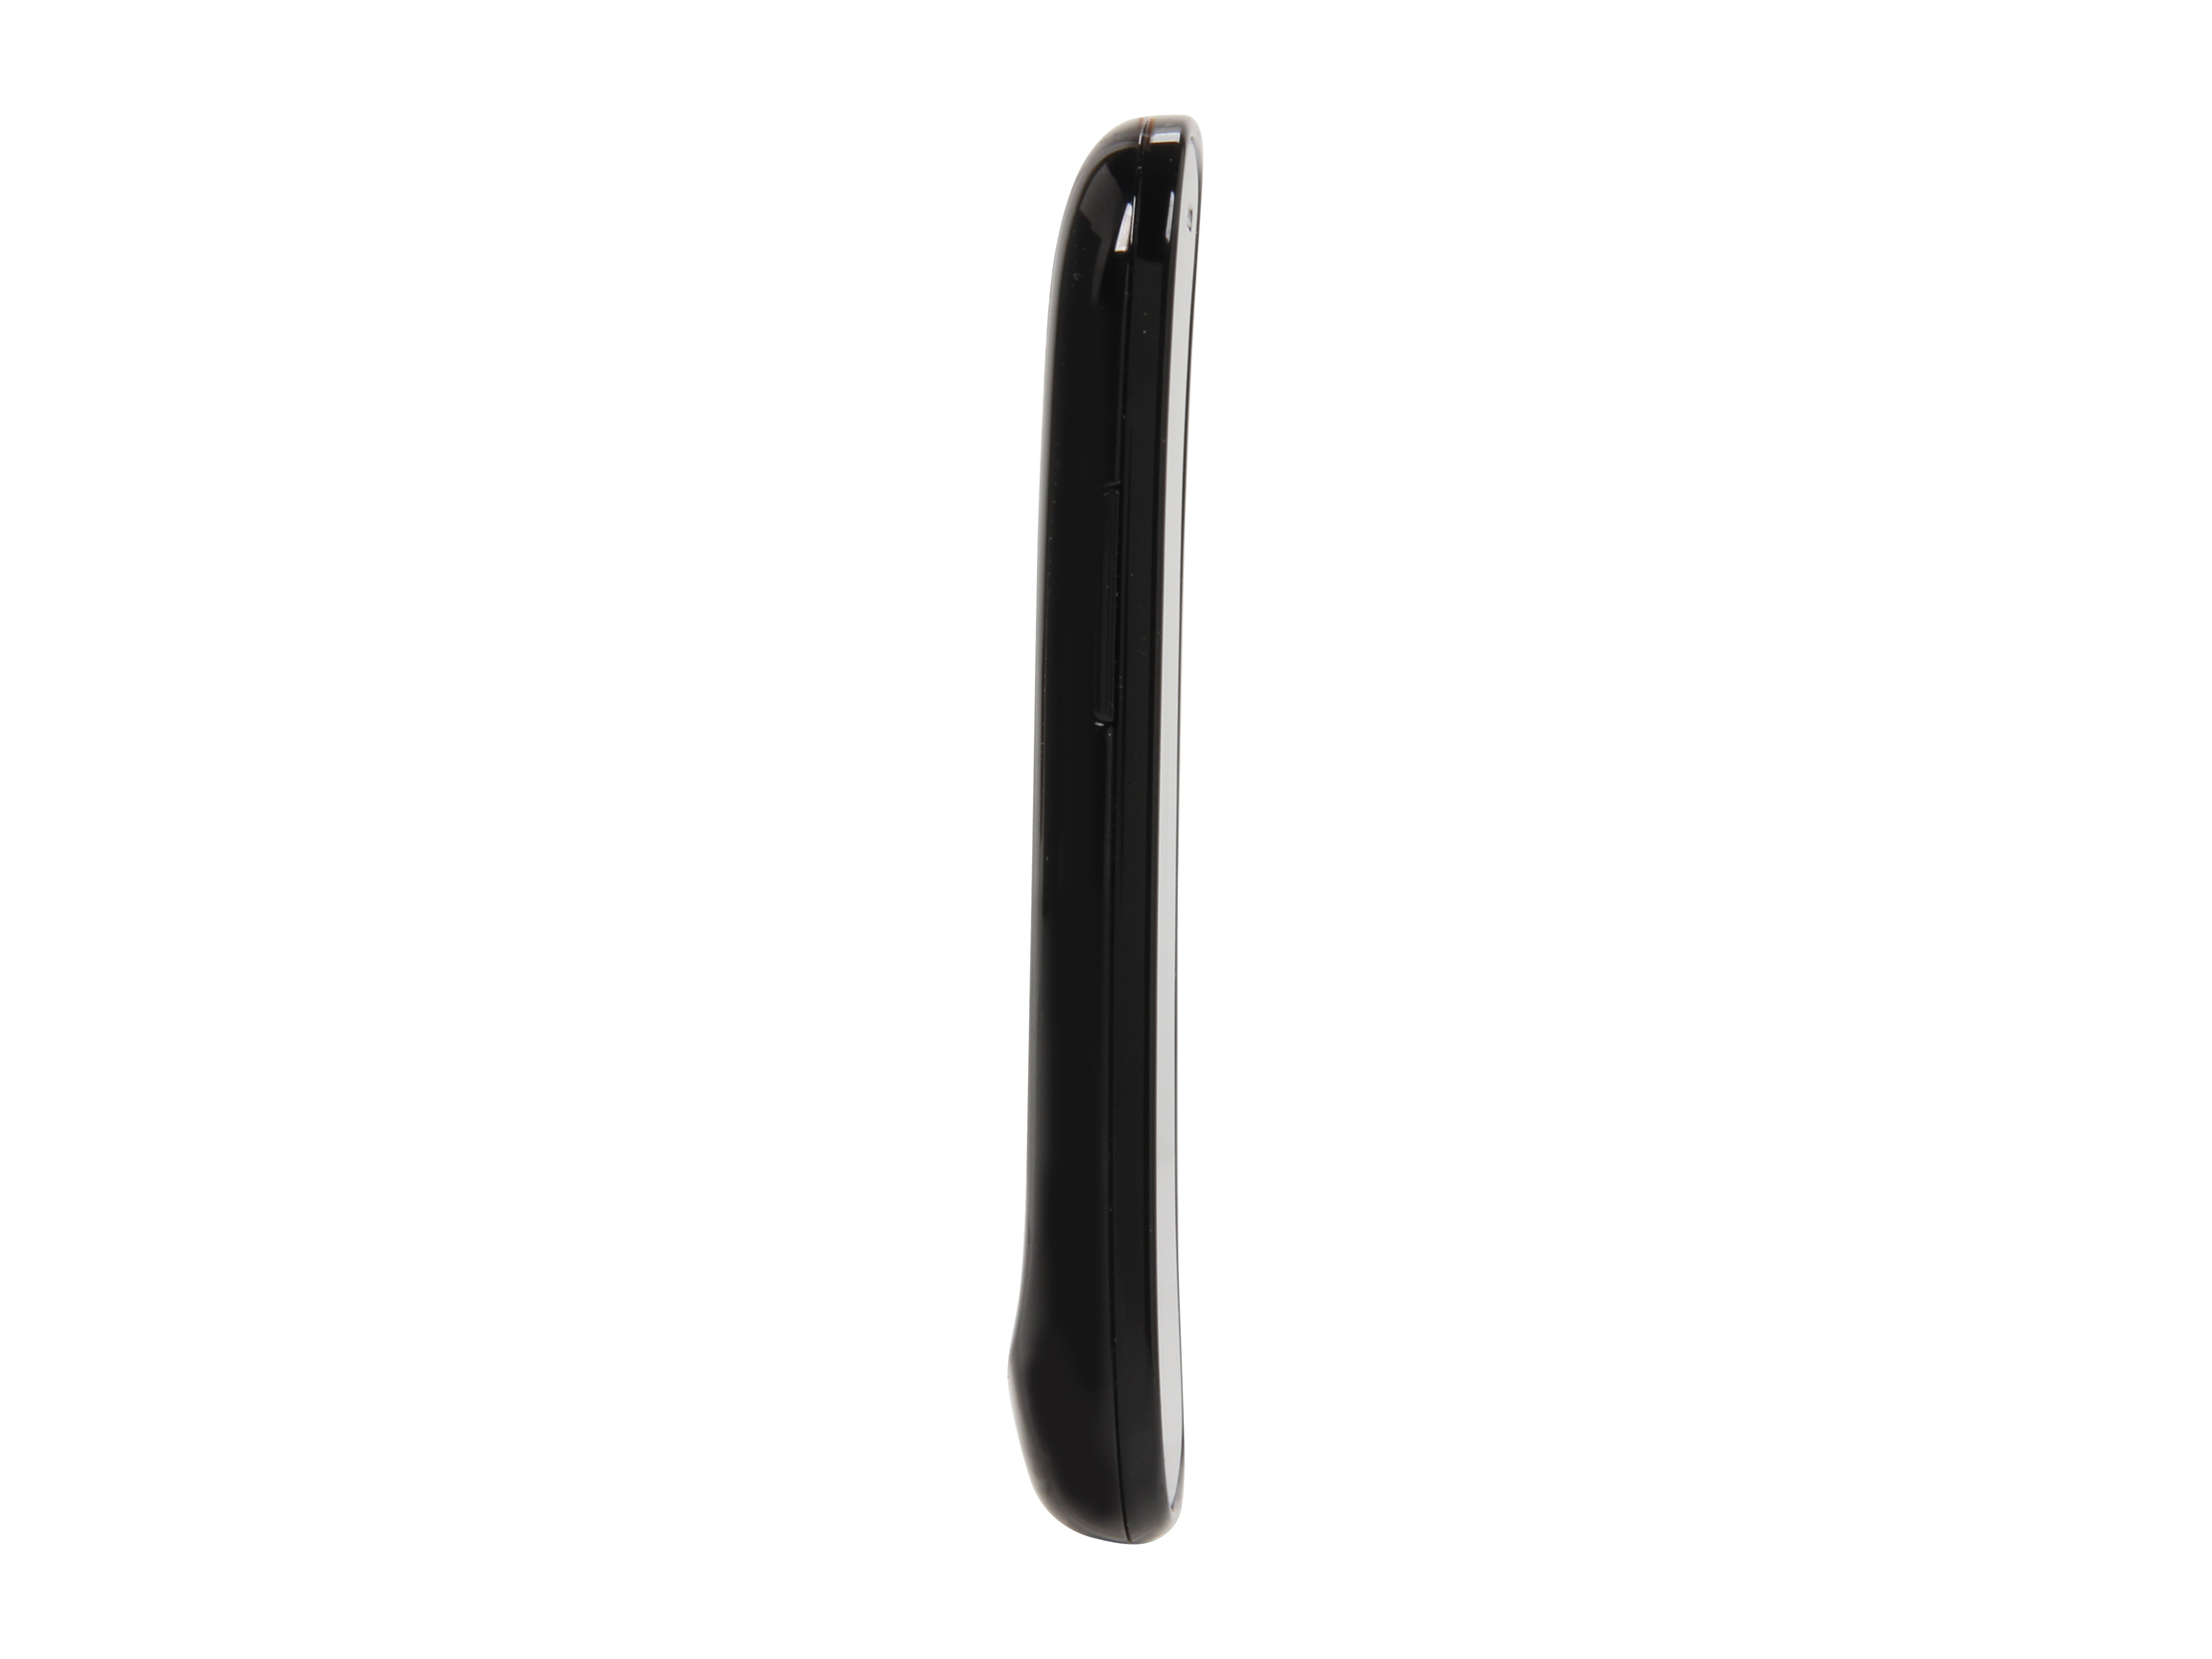 Samsung Google Nexus S Black 3G Unlocked GSM Smart Phone w/ Android OS 2.3 / 4.0" Screen / 5.0MP & LED Flash (i9020A)